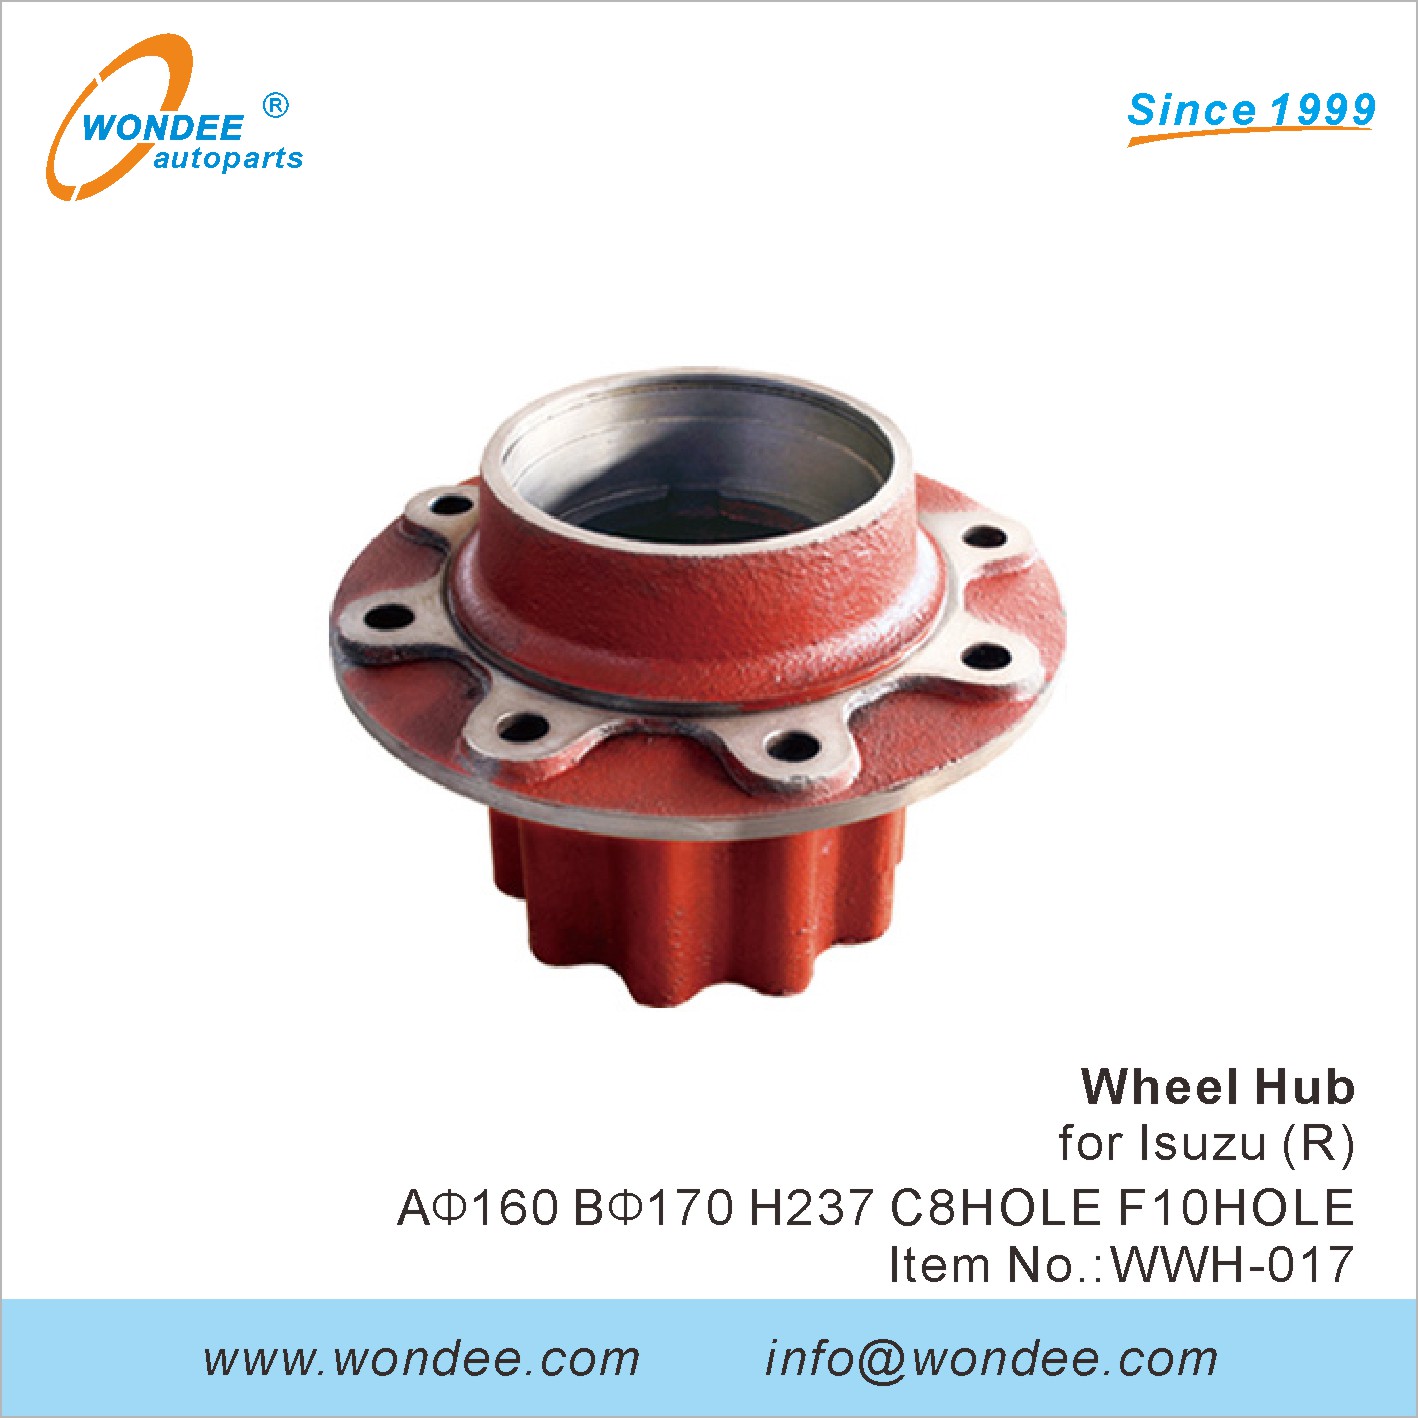 WONDEE wheel hub (17)